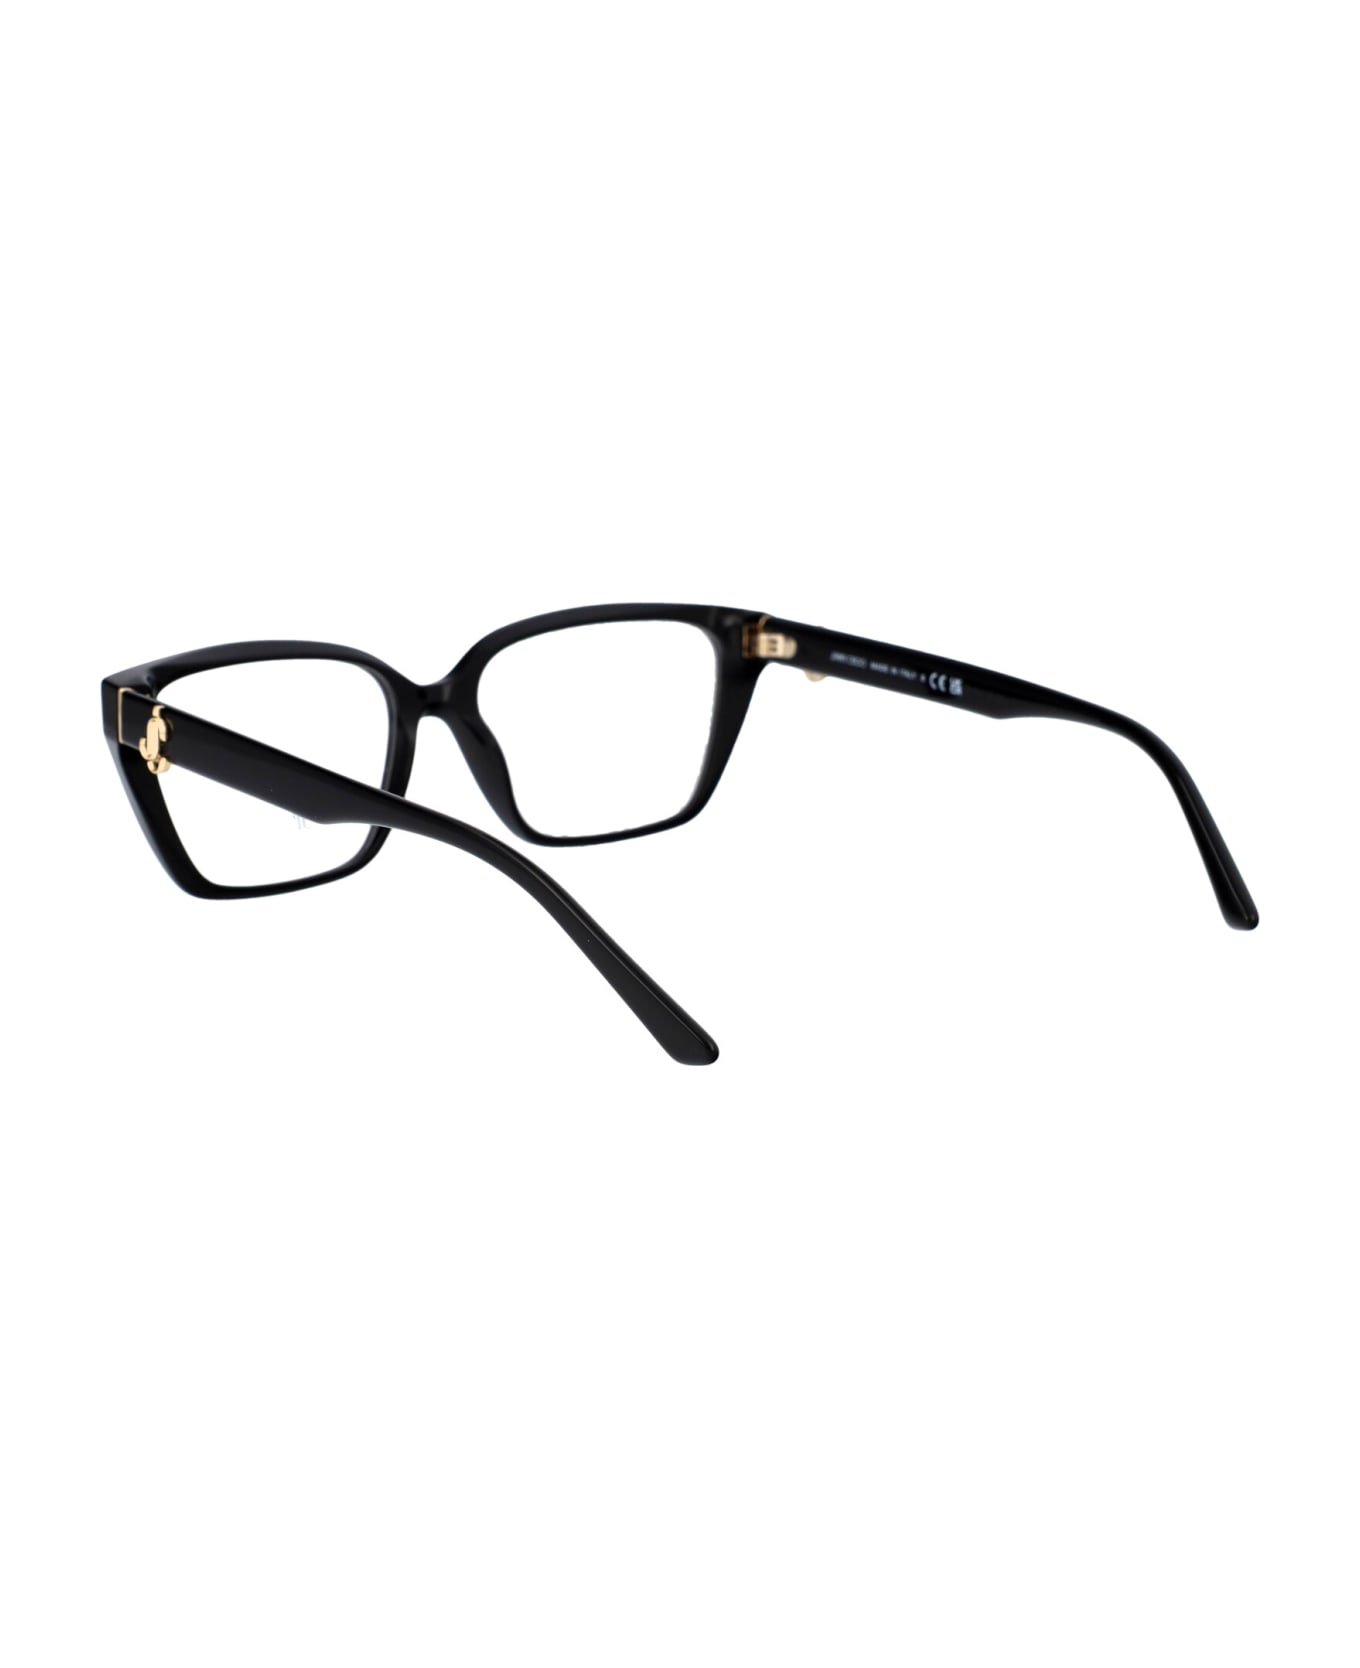 Jimmy Choo Eyewear 0jc3001b Glasses - 5000 Black